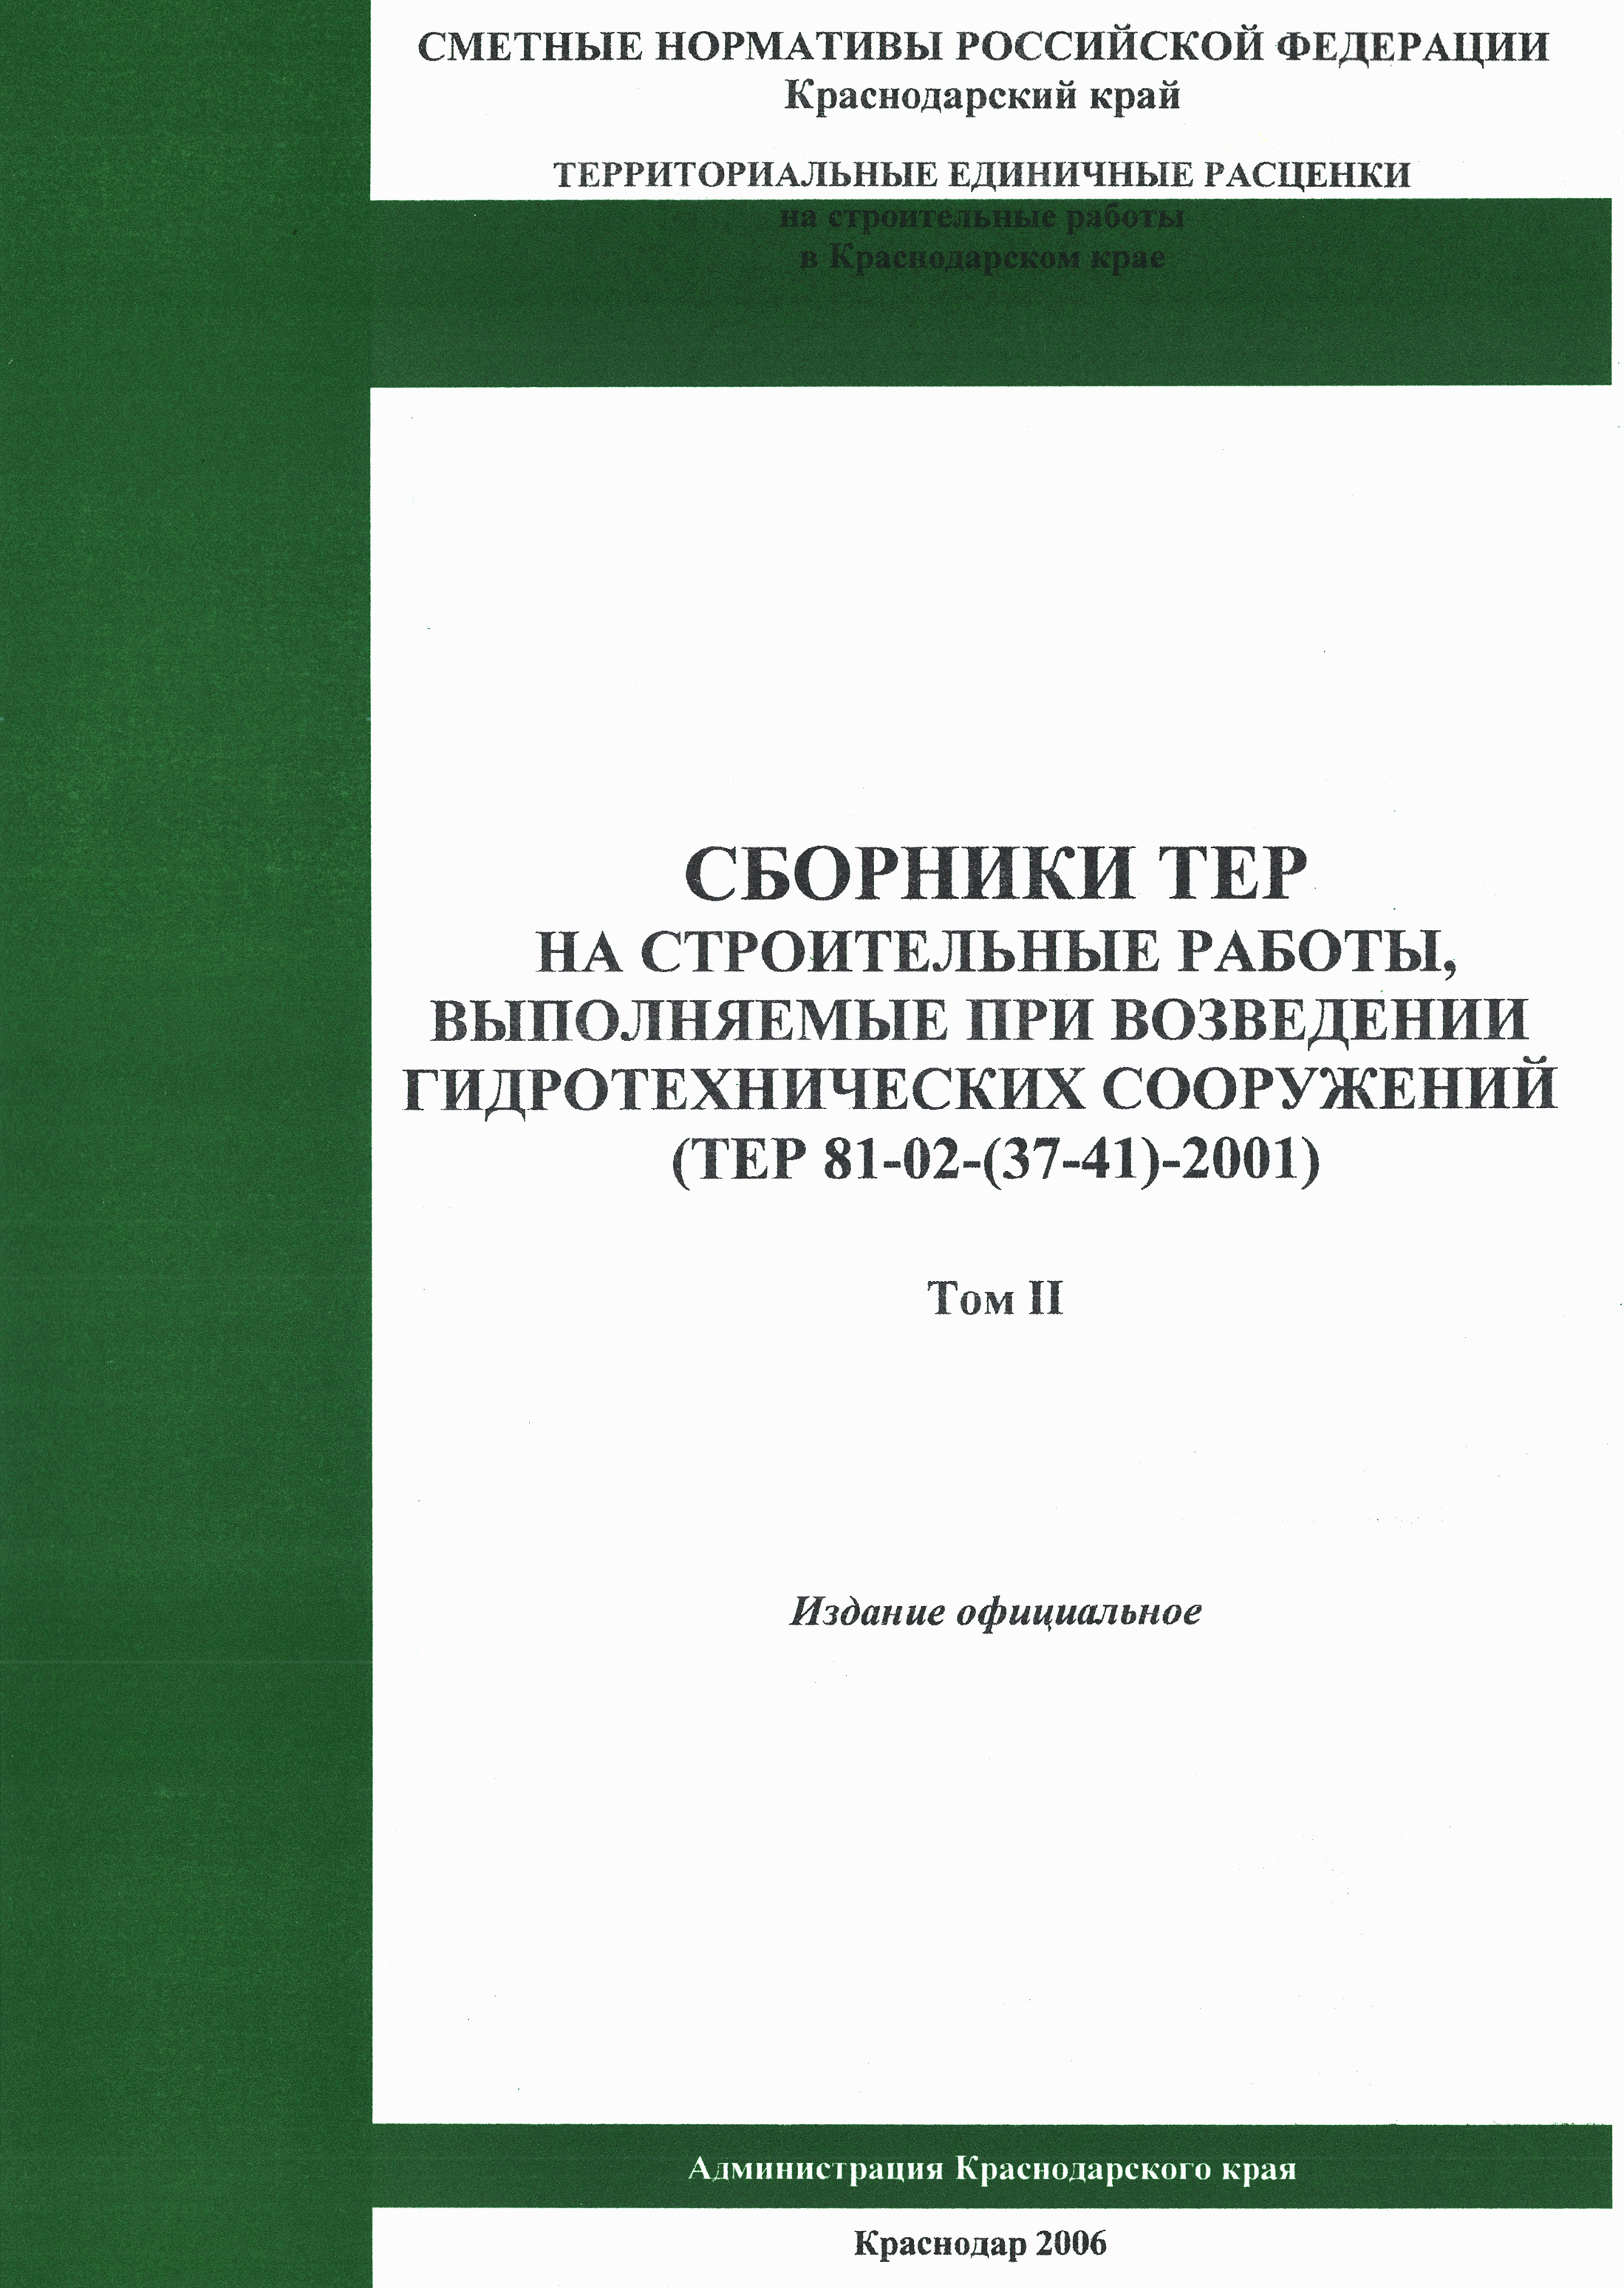 ТЕР Краснодарский край 2001-41